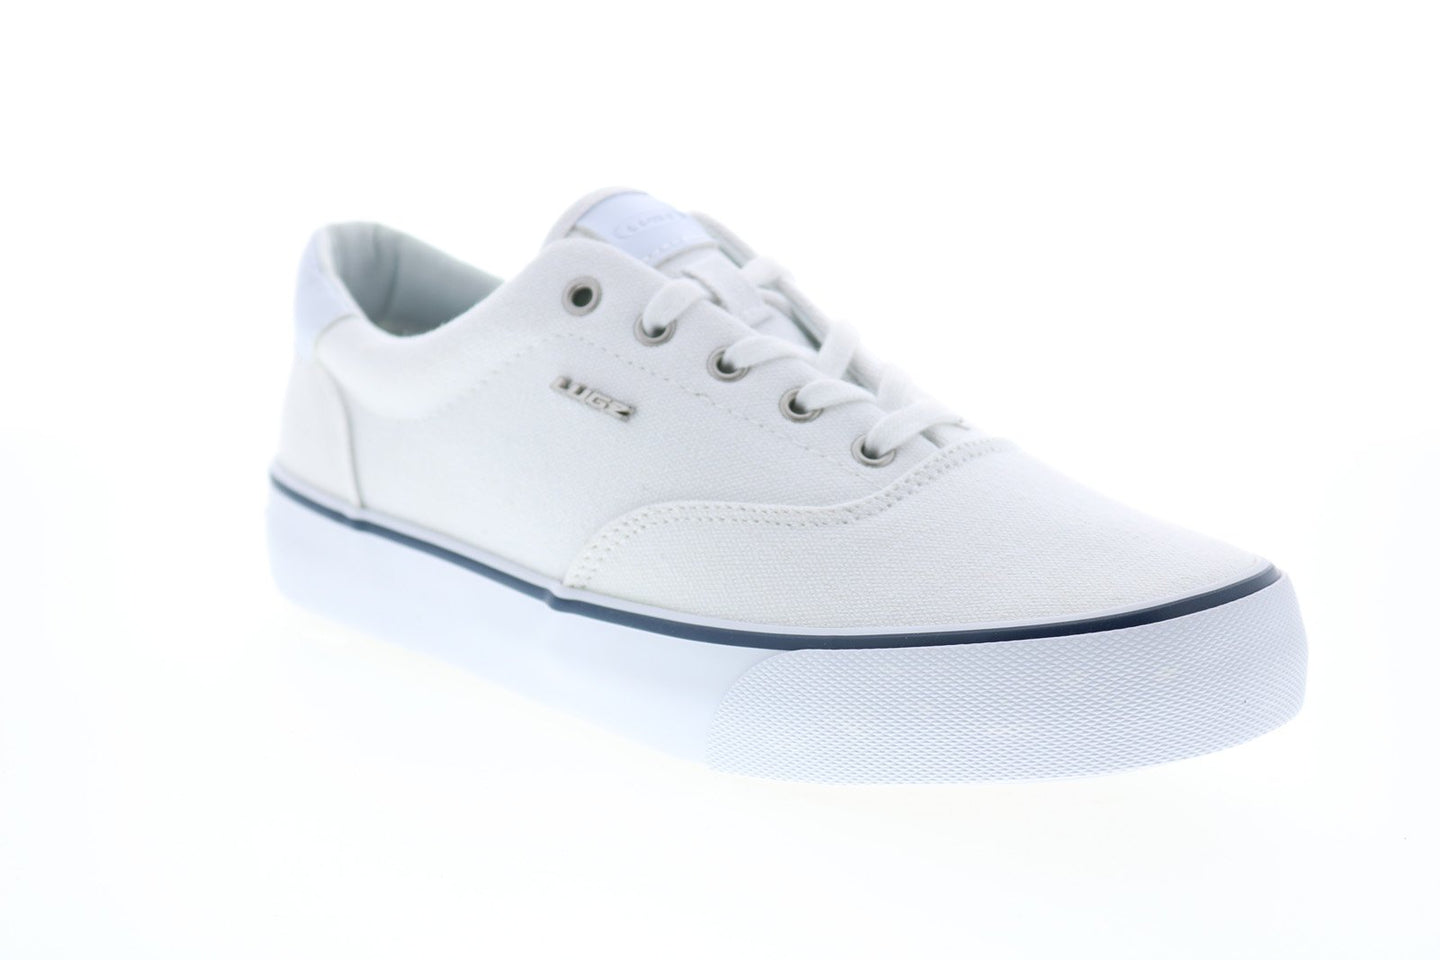 Lugz Flip MFLIPC-140 Mens White Canvas Lace Up Lifestyle Sneakers Shoe ...